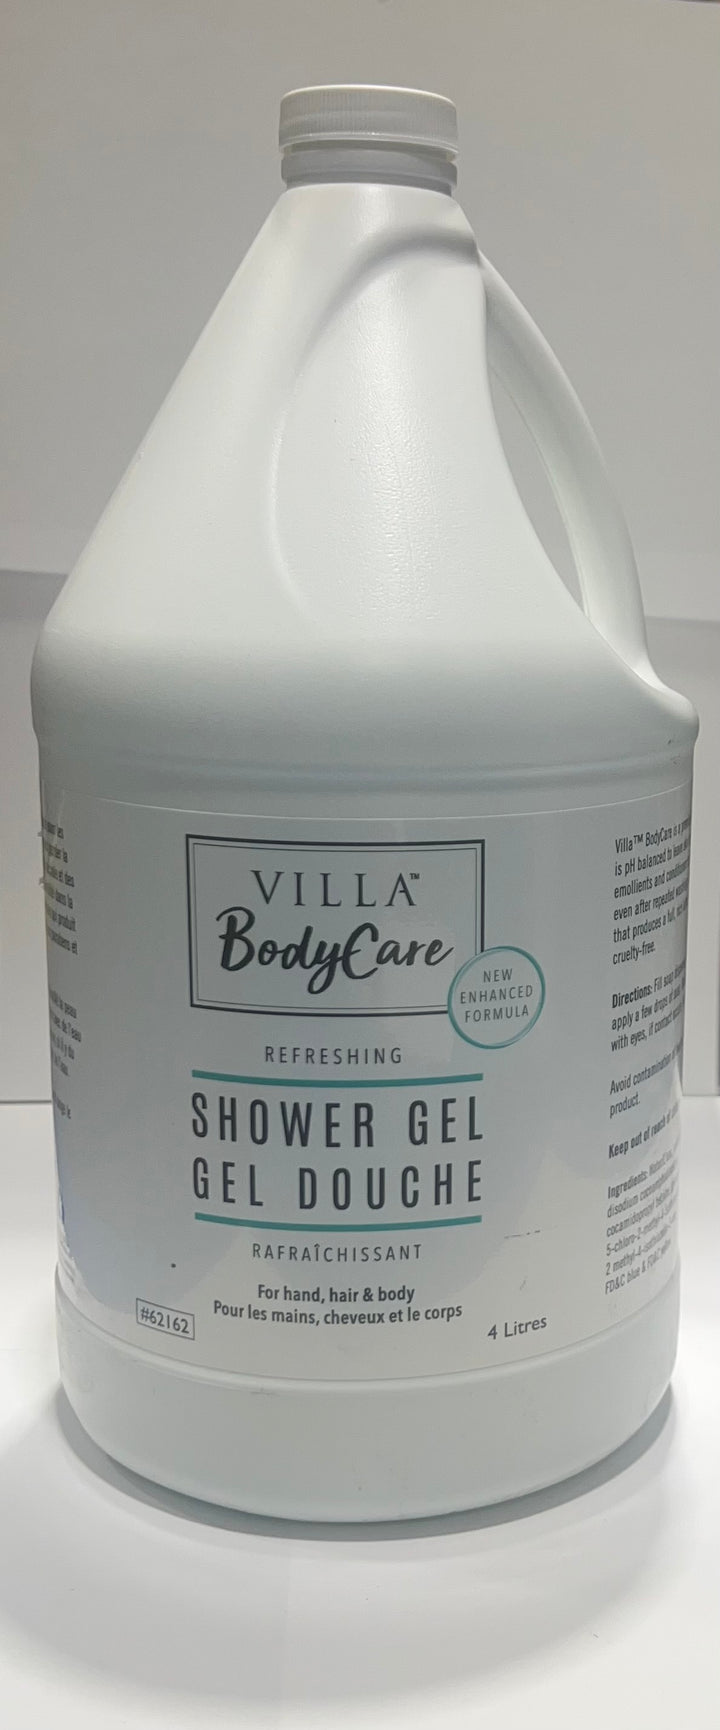 Hair & Body Liquid Soap 4L x 4 Jugs (Shower Gel)